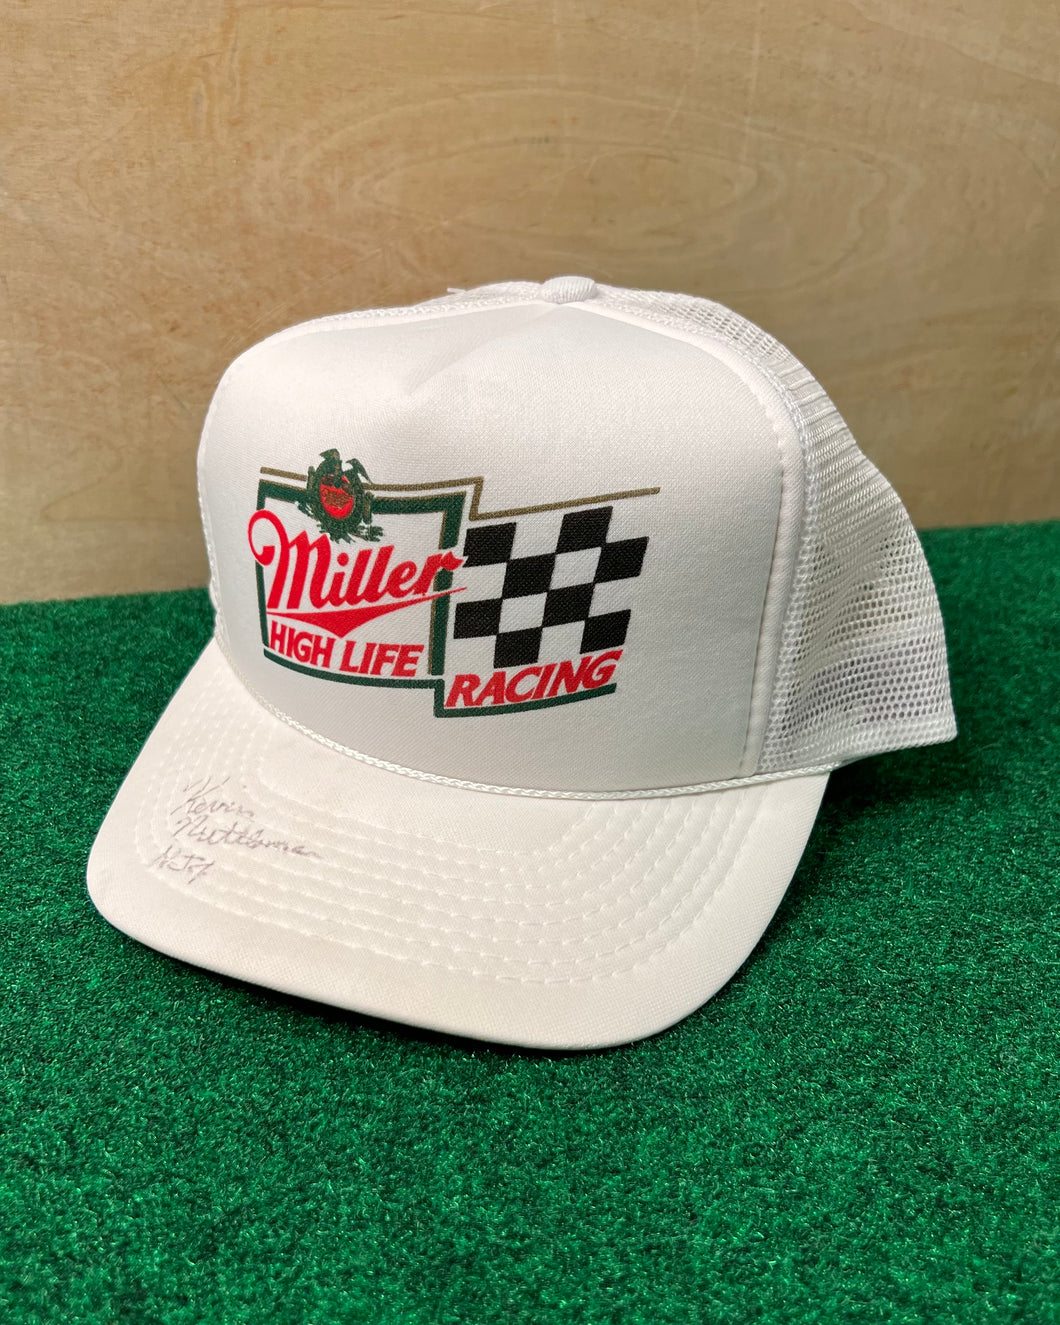 Vintage Miller High Life Racing Autographed Hat